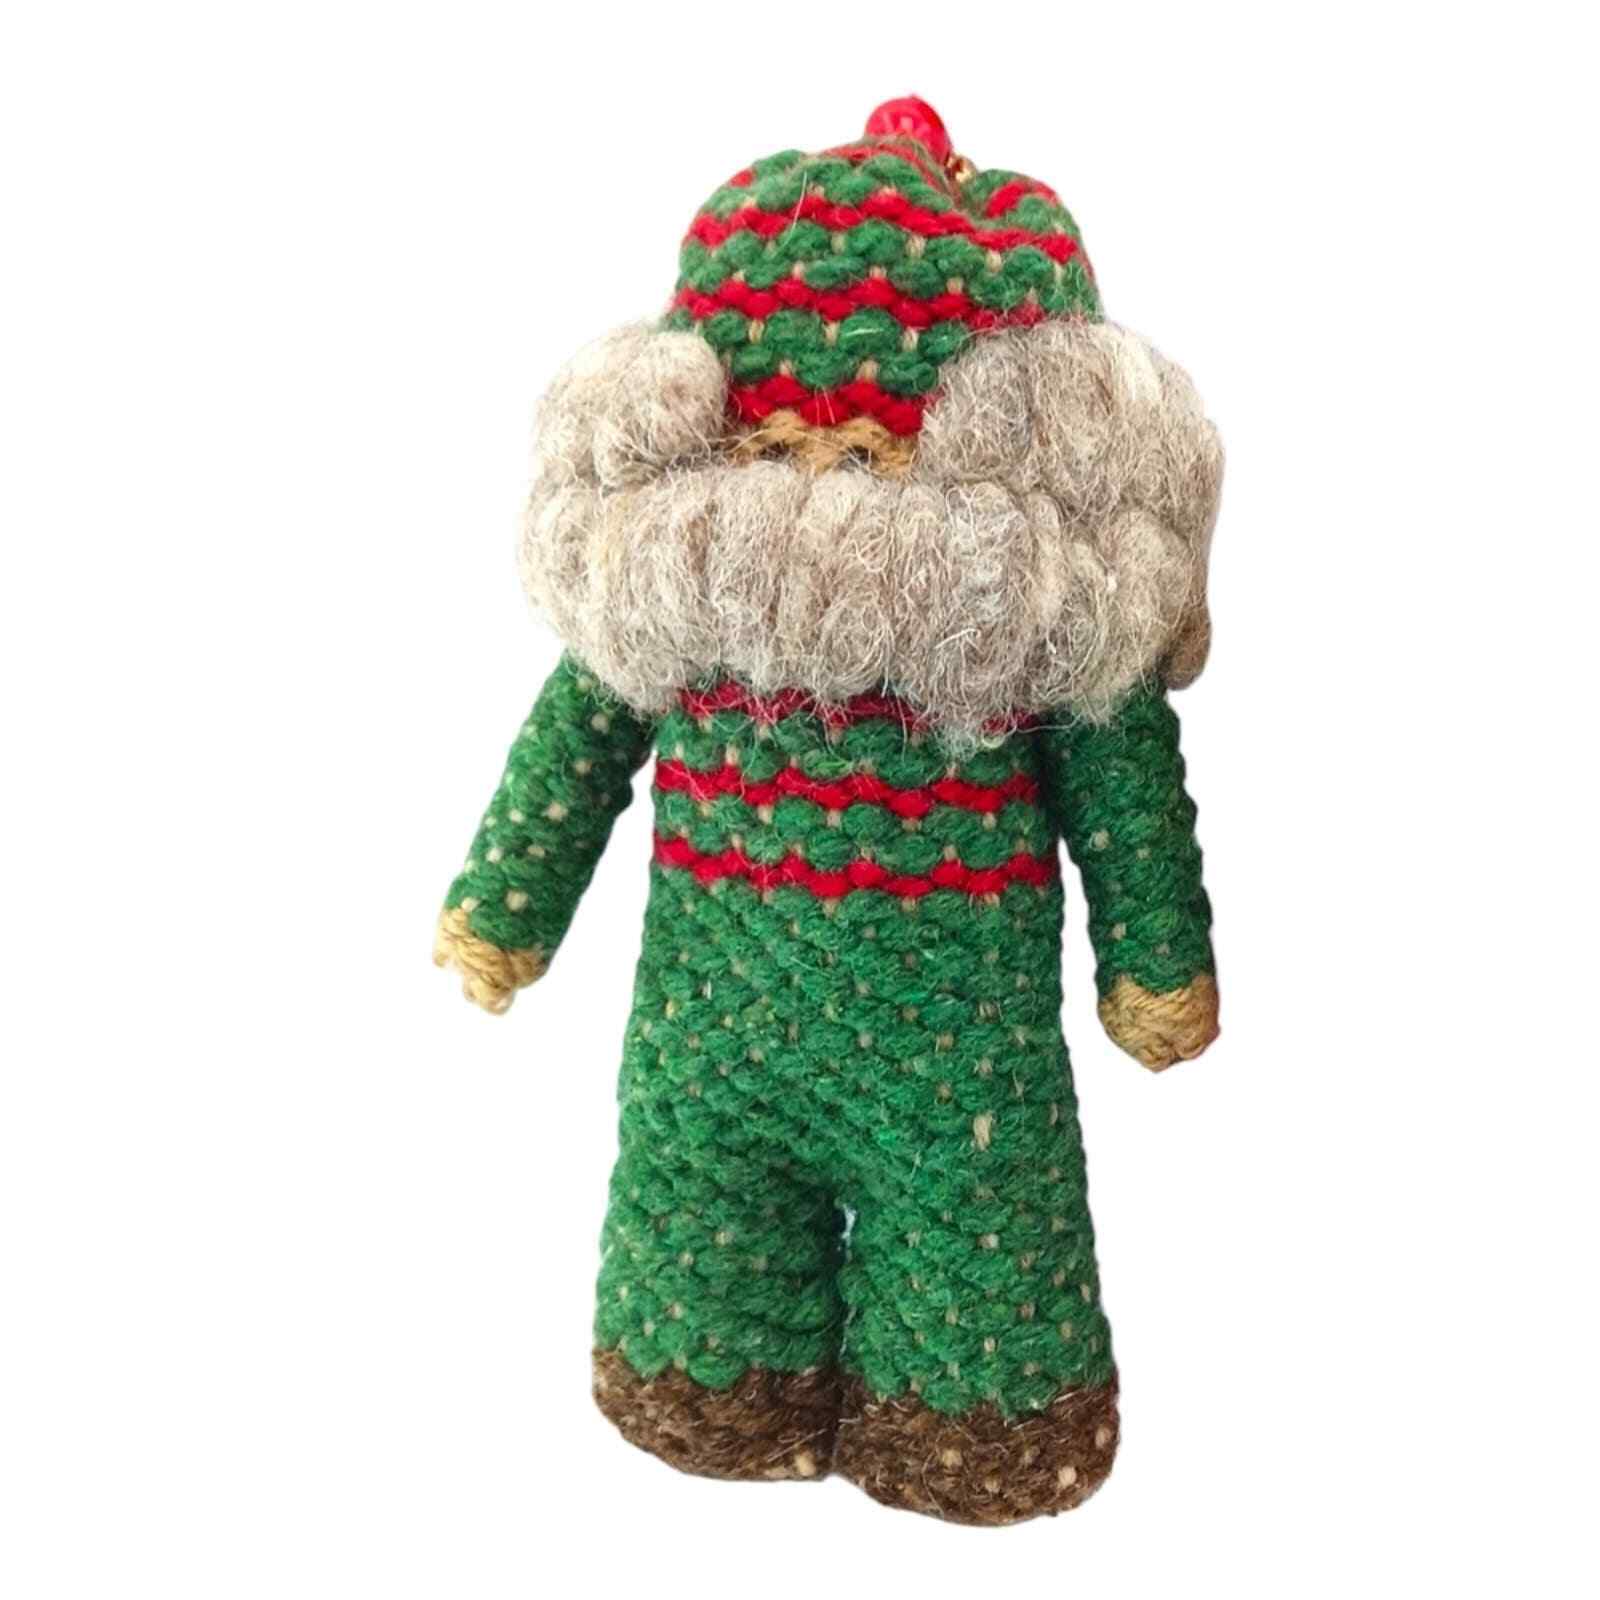 Vintage Particular People, Elf, Wool, Knit, Ornament, Christmas Crochet 1984